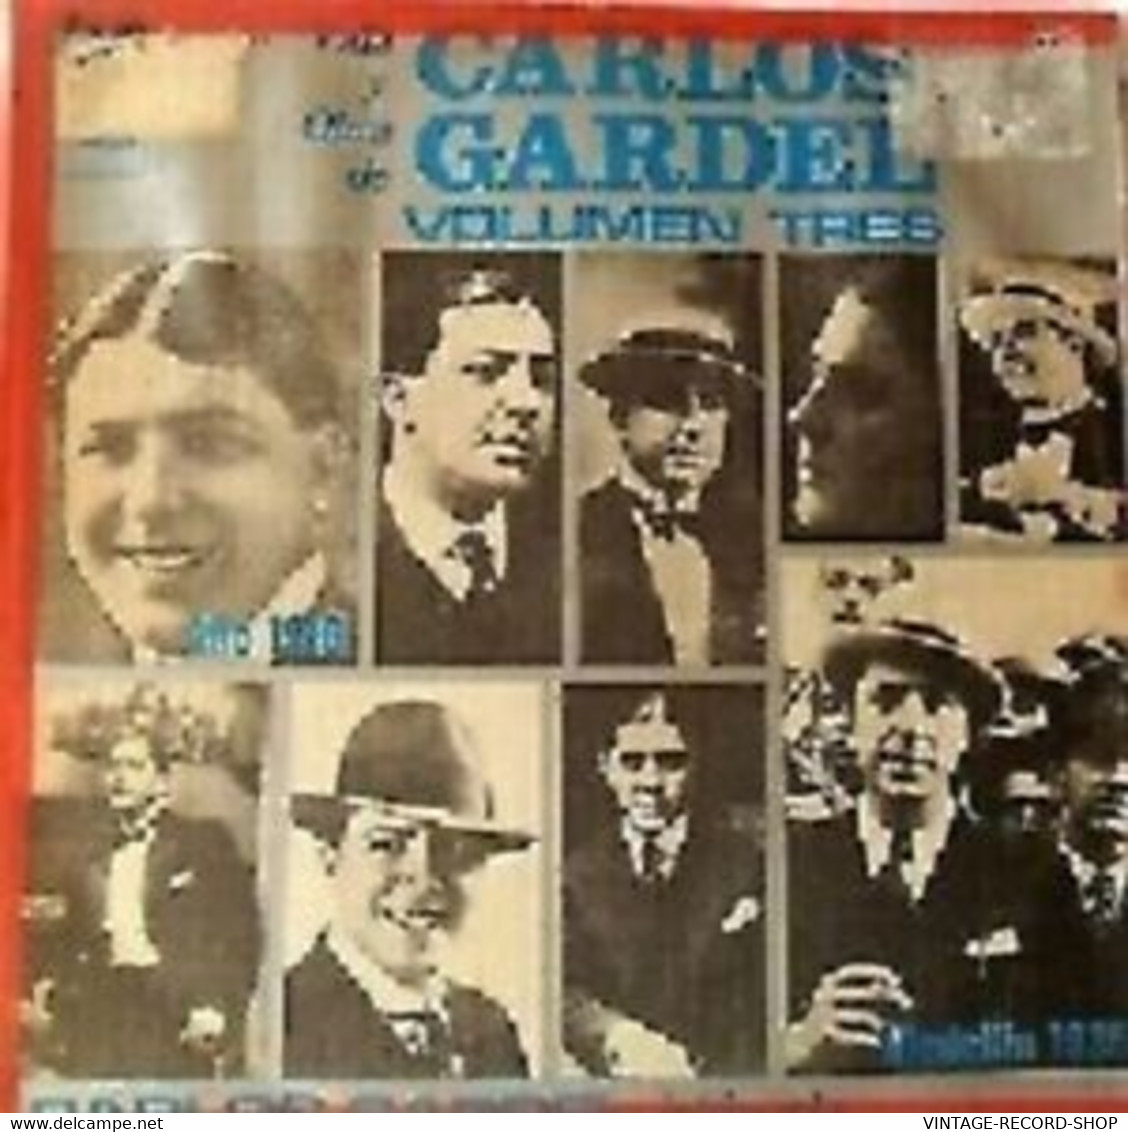 CARLOS GARDEL-VIDA Y OBRA 1918 VG++ RELEASED DATE: 1972 COUNTRY MANUFACTURED- - DVD Musicales